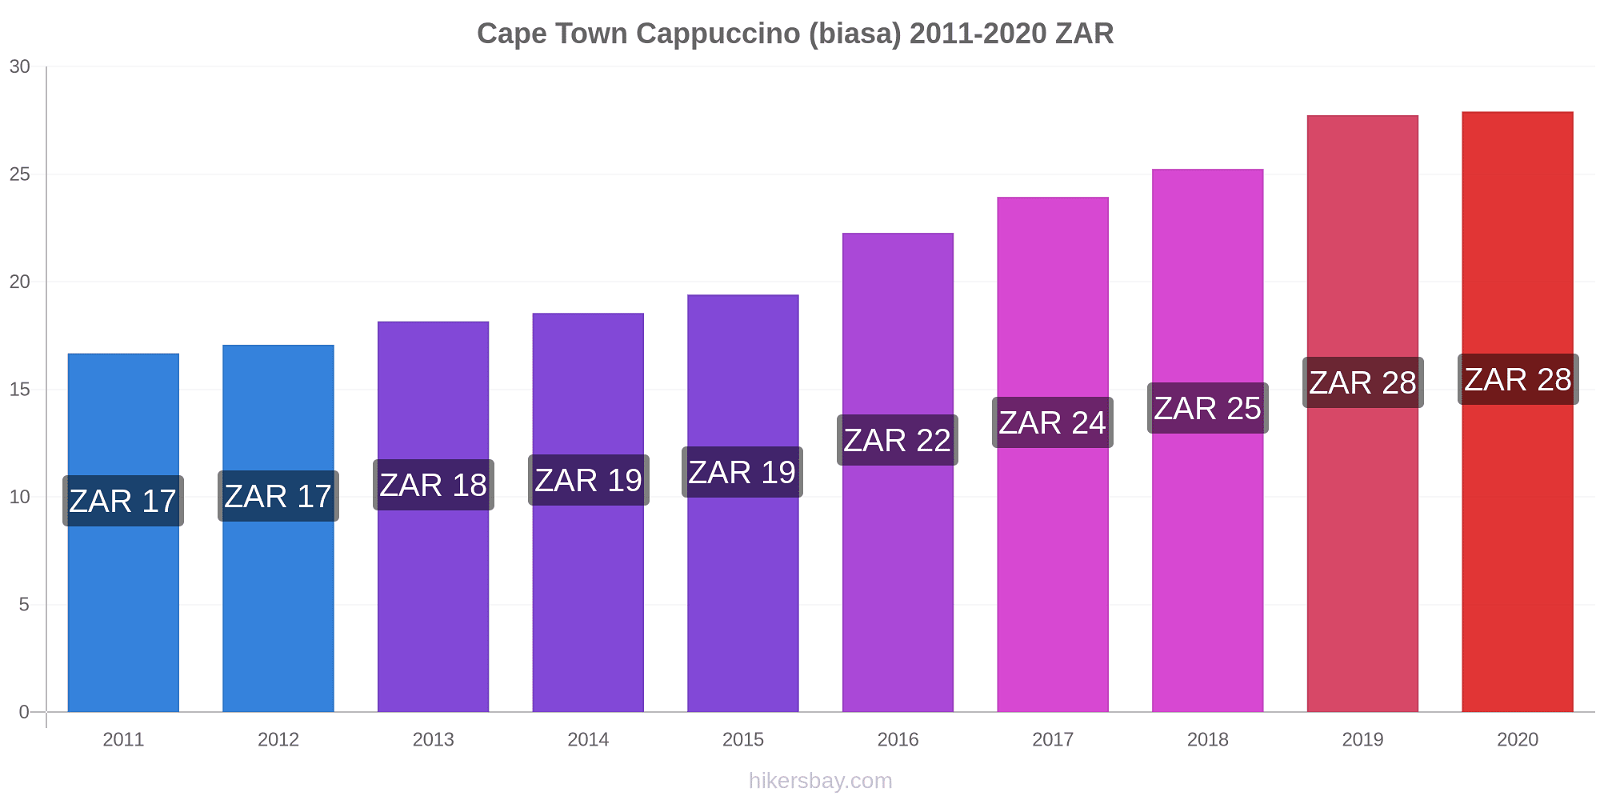 Cape Town perubahan harga Cappuccino (biasa) hikersbay.com